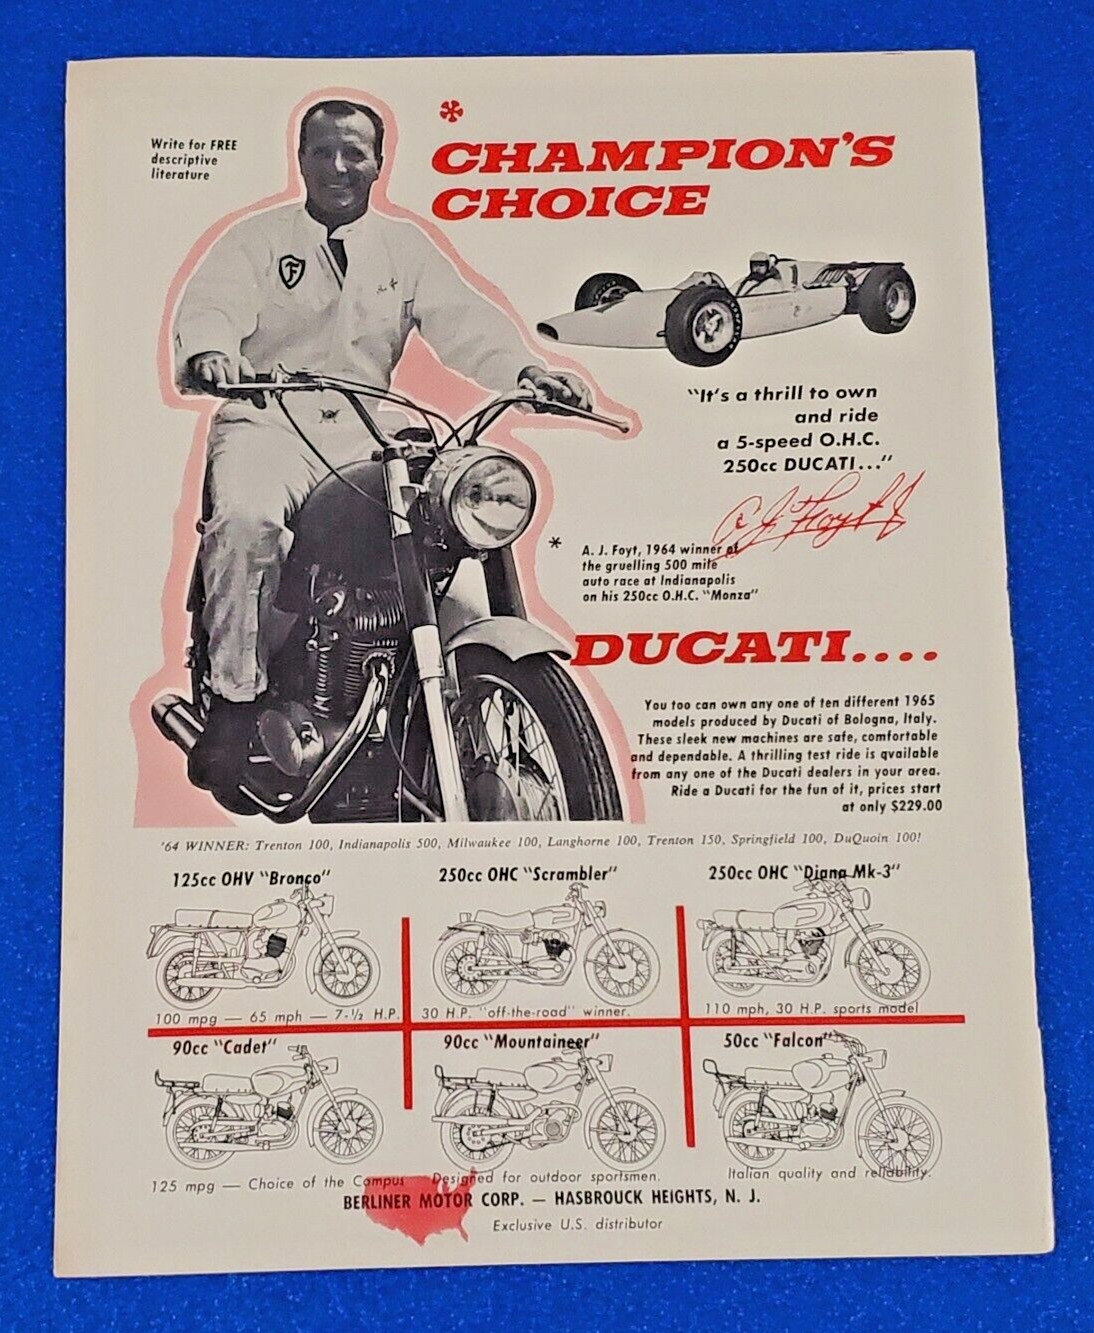 1965 DUCATI MOTORCYCLE PRODUCT LINE A.J. FOYT ENDORSEMENT ORIGINAL PRINT AD S24